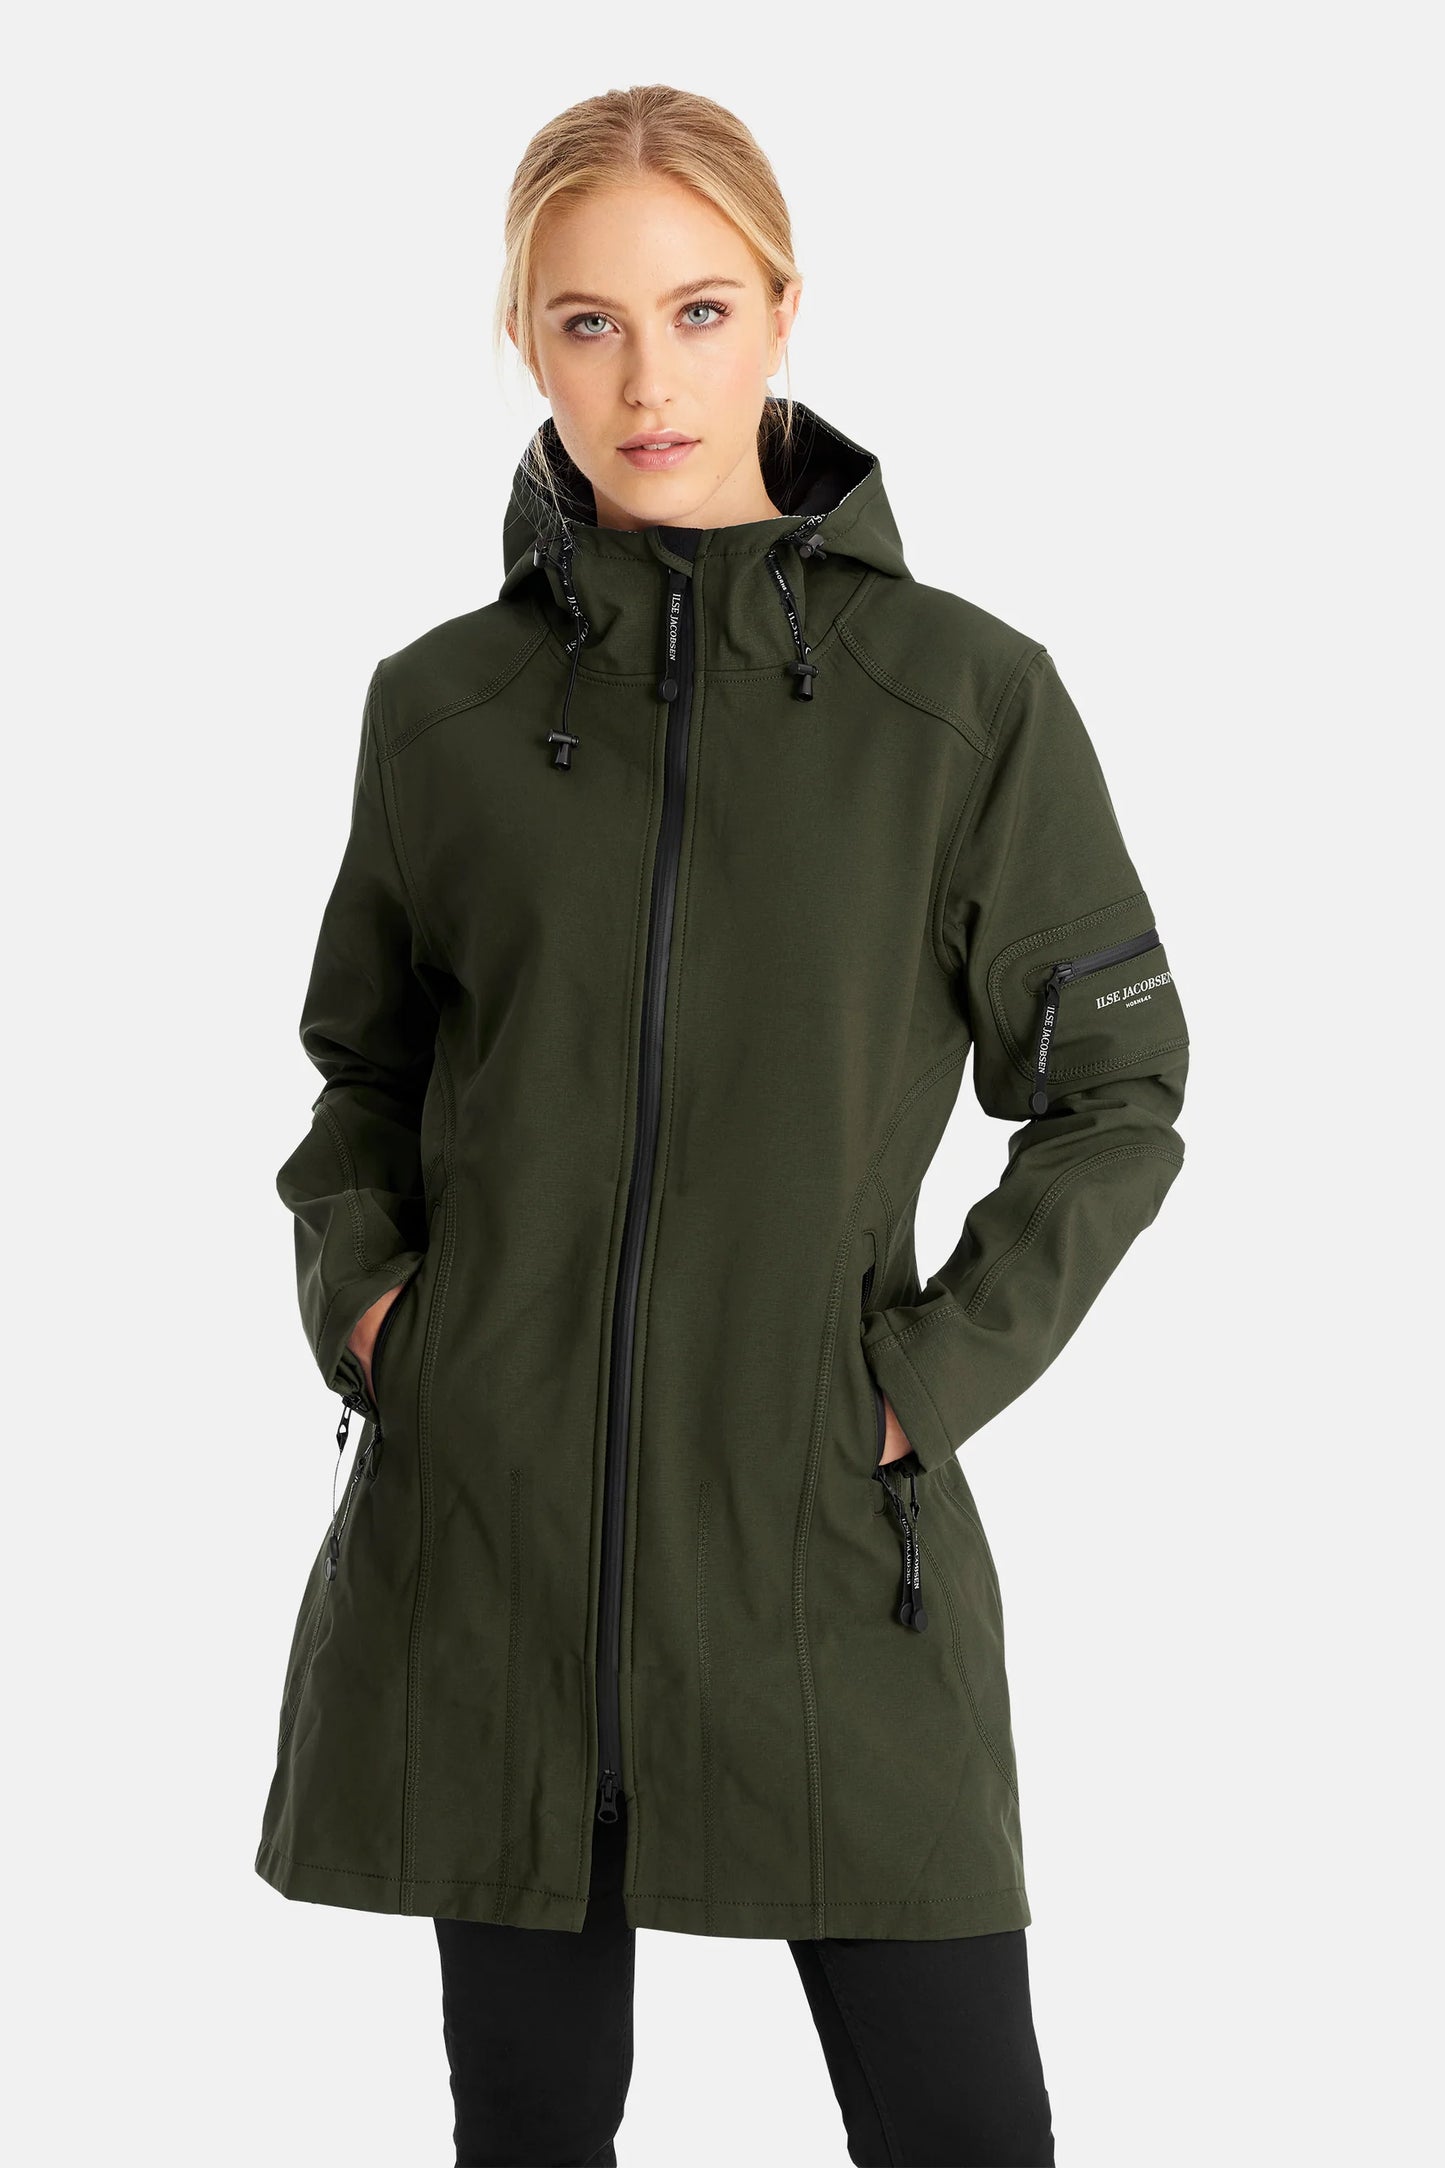 Rain 07 fleece lined raincoat